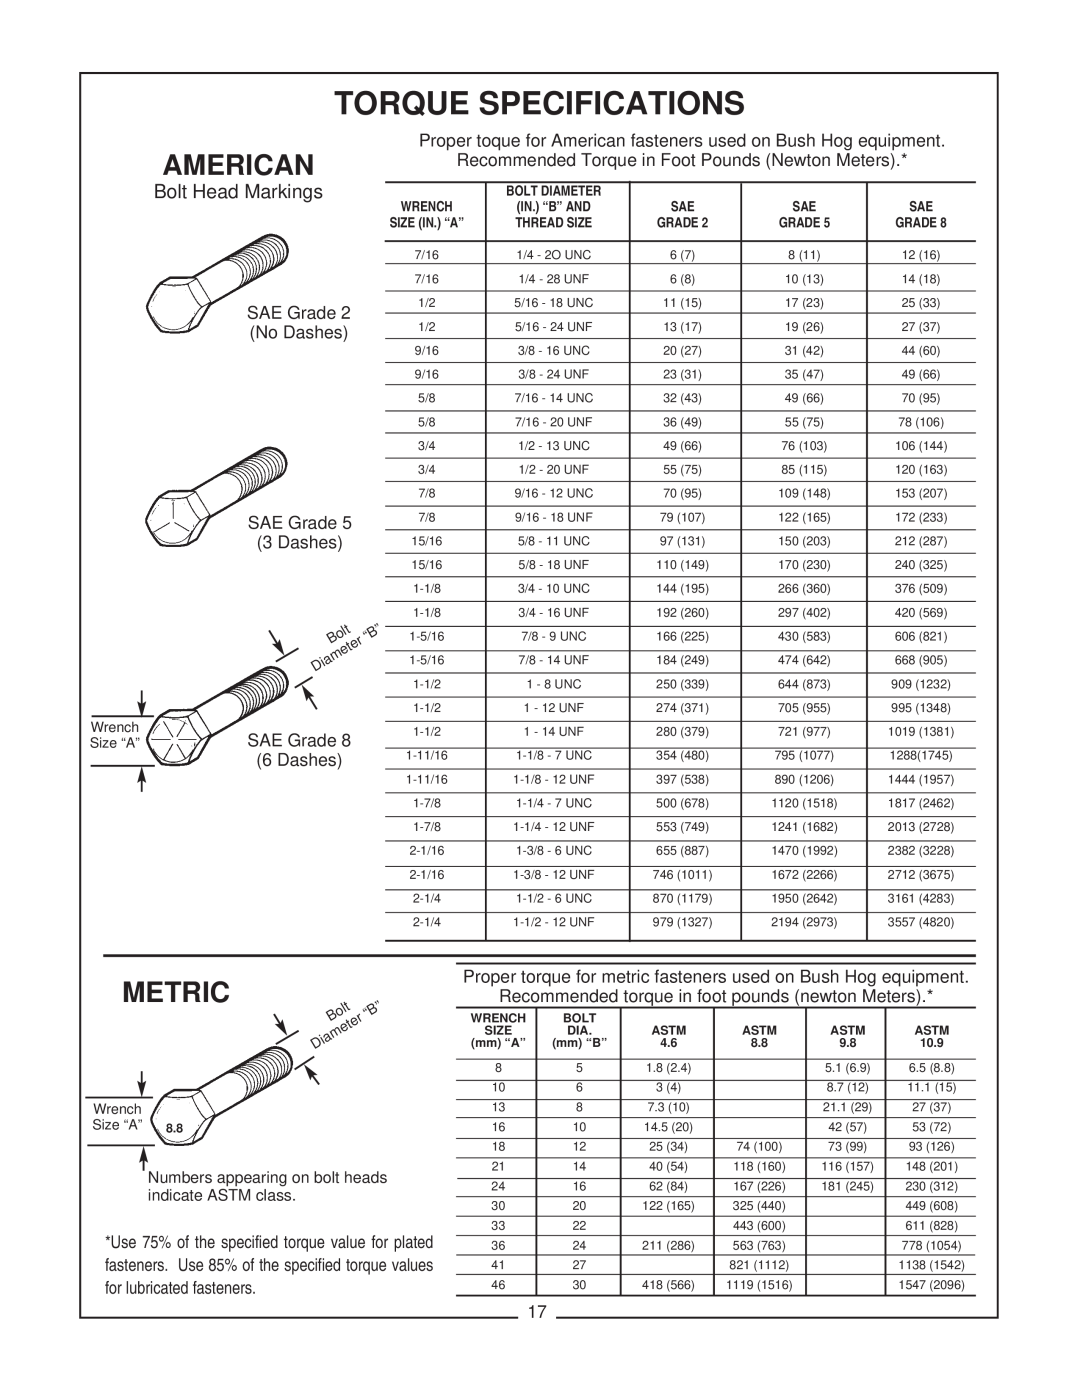 Bush Hog RFM 60 Torque Specifications, American, Metric, Bolt Diameter, Wrench Size “A”, 7/16, Astm, mm “A”, mm “B” 